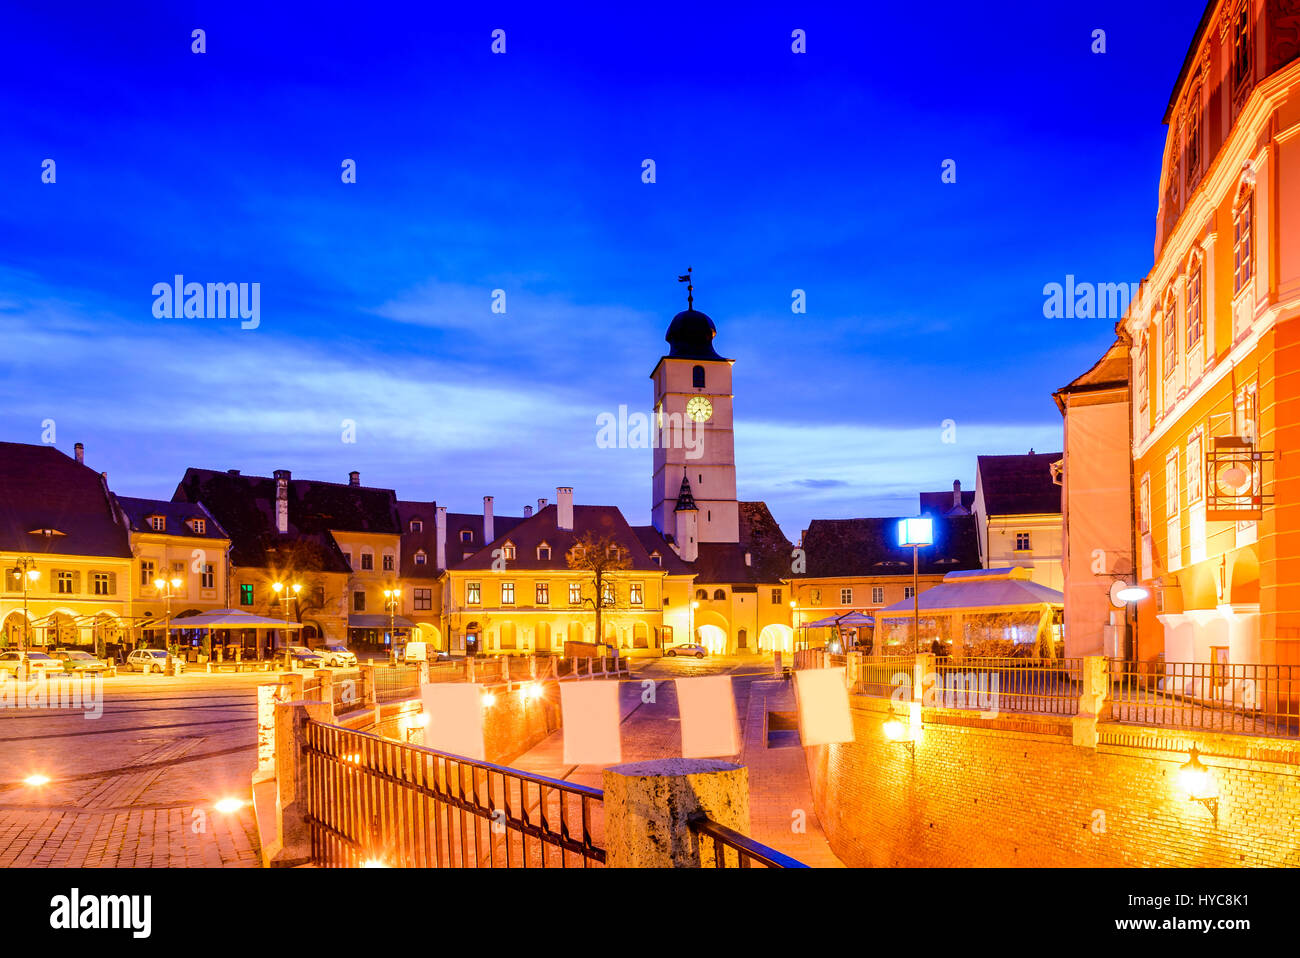 Sibiu, Romania. Twilight image of Council Tower in Small Square, Transylvania. Stock Photo